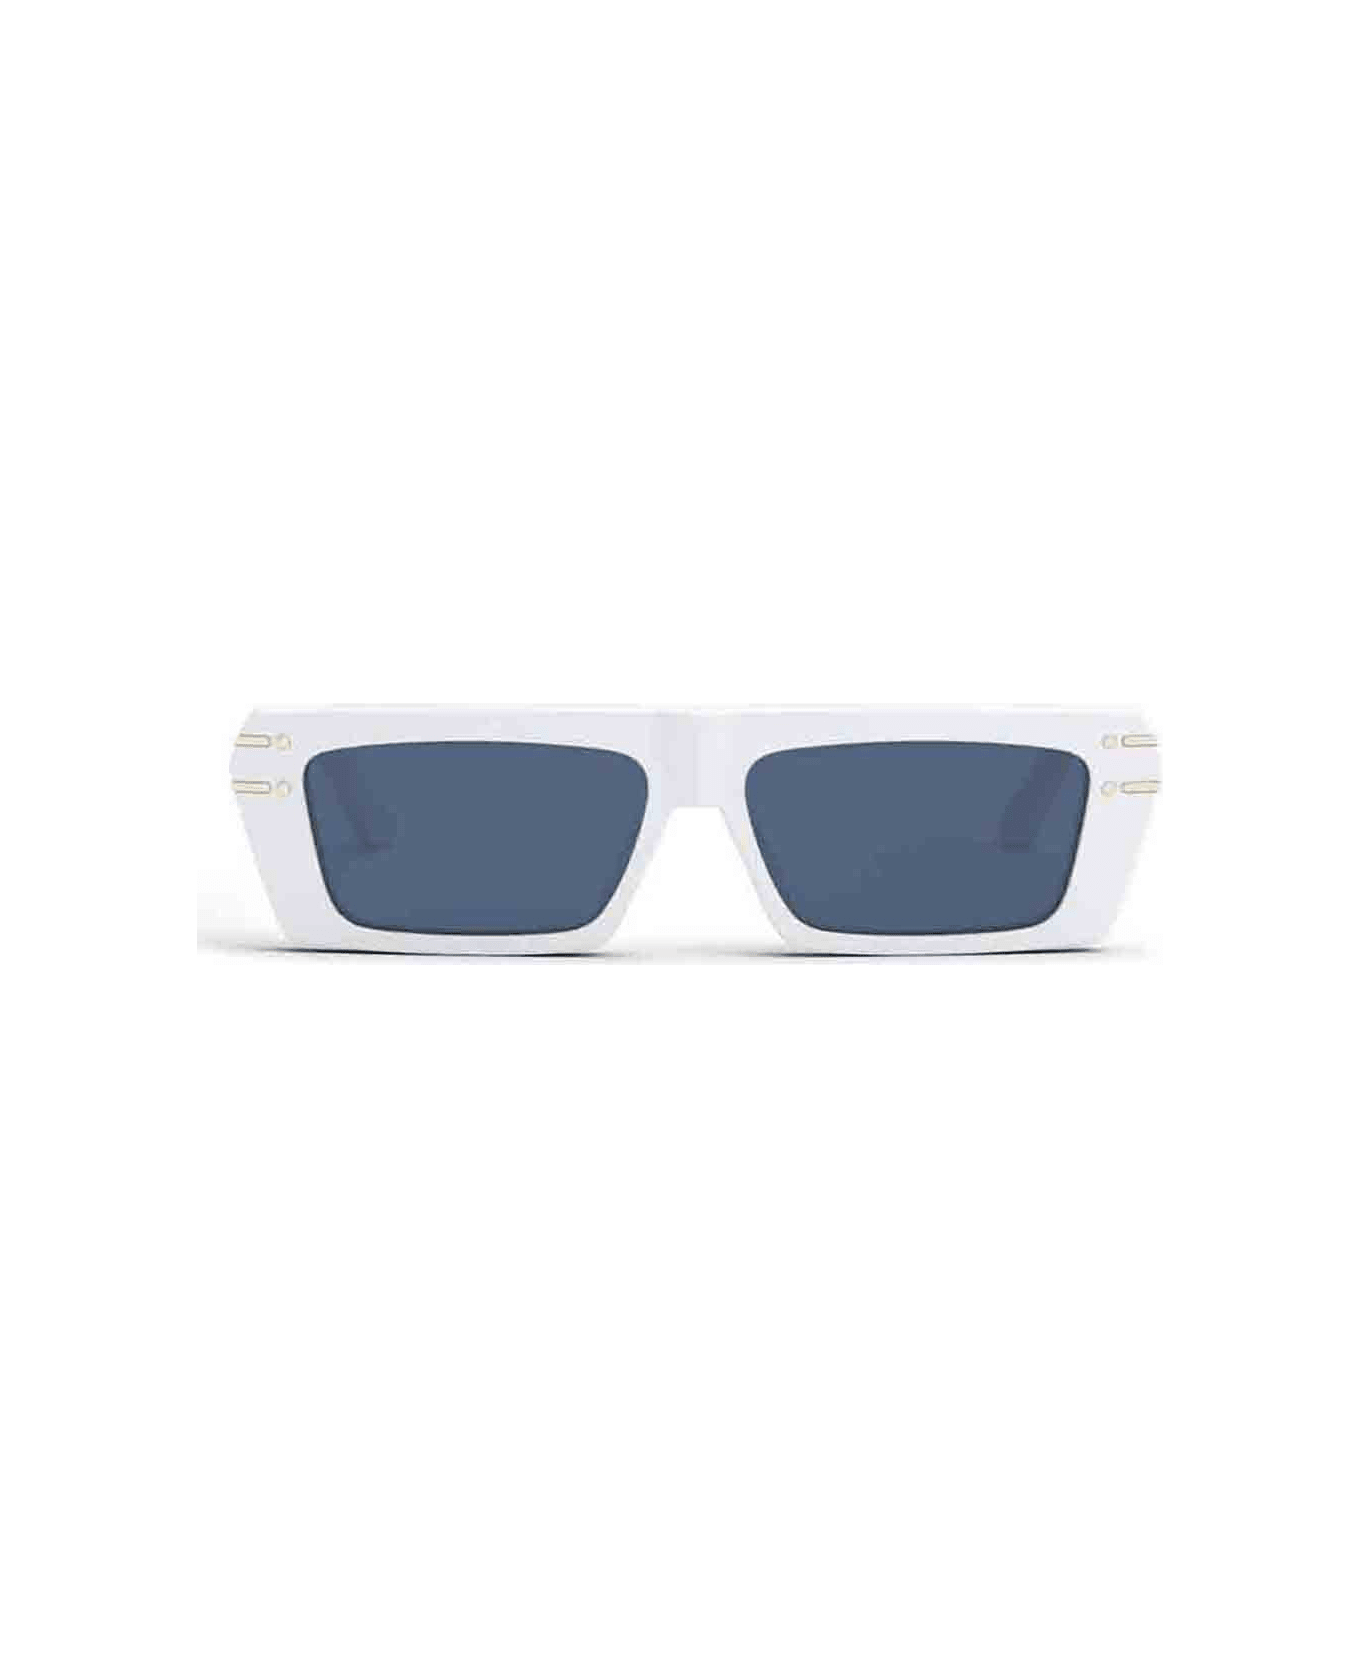 Dior Eyewear Sunglasses - Bianco/Blu サングラス